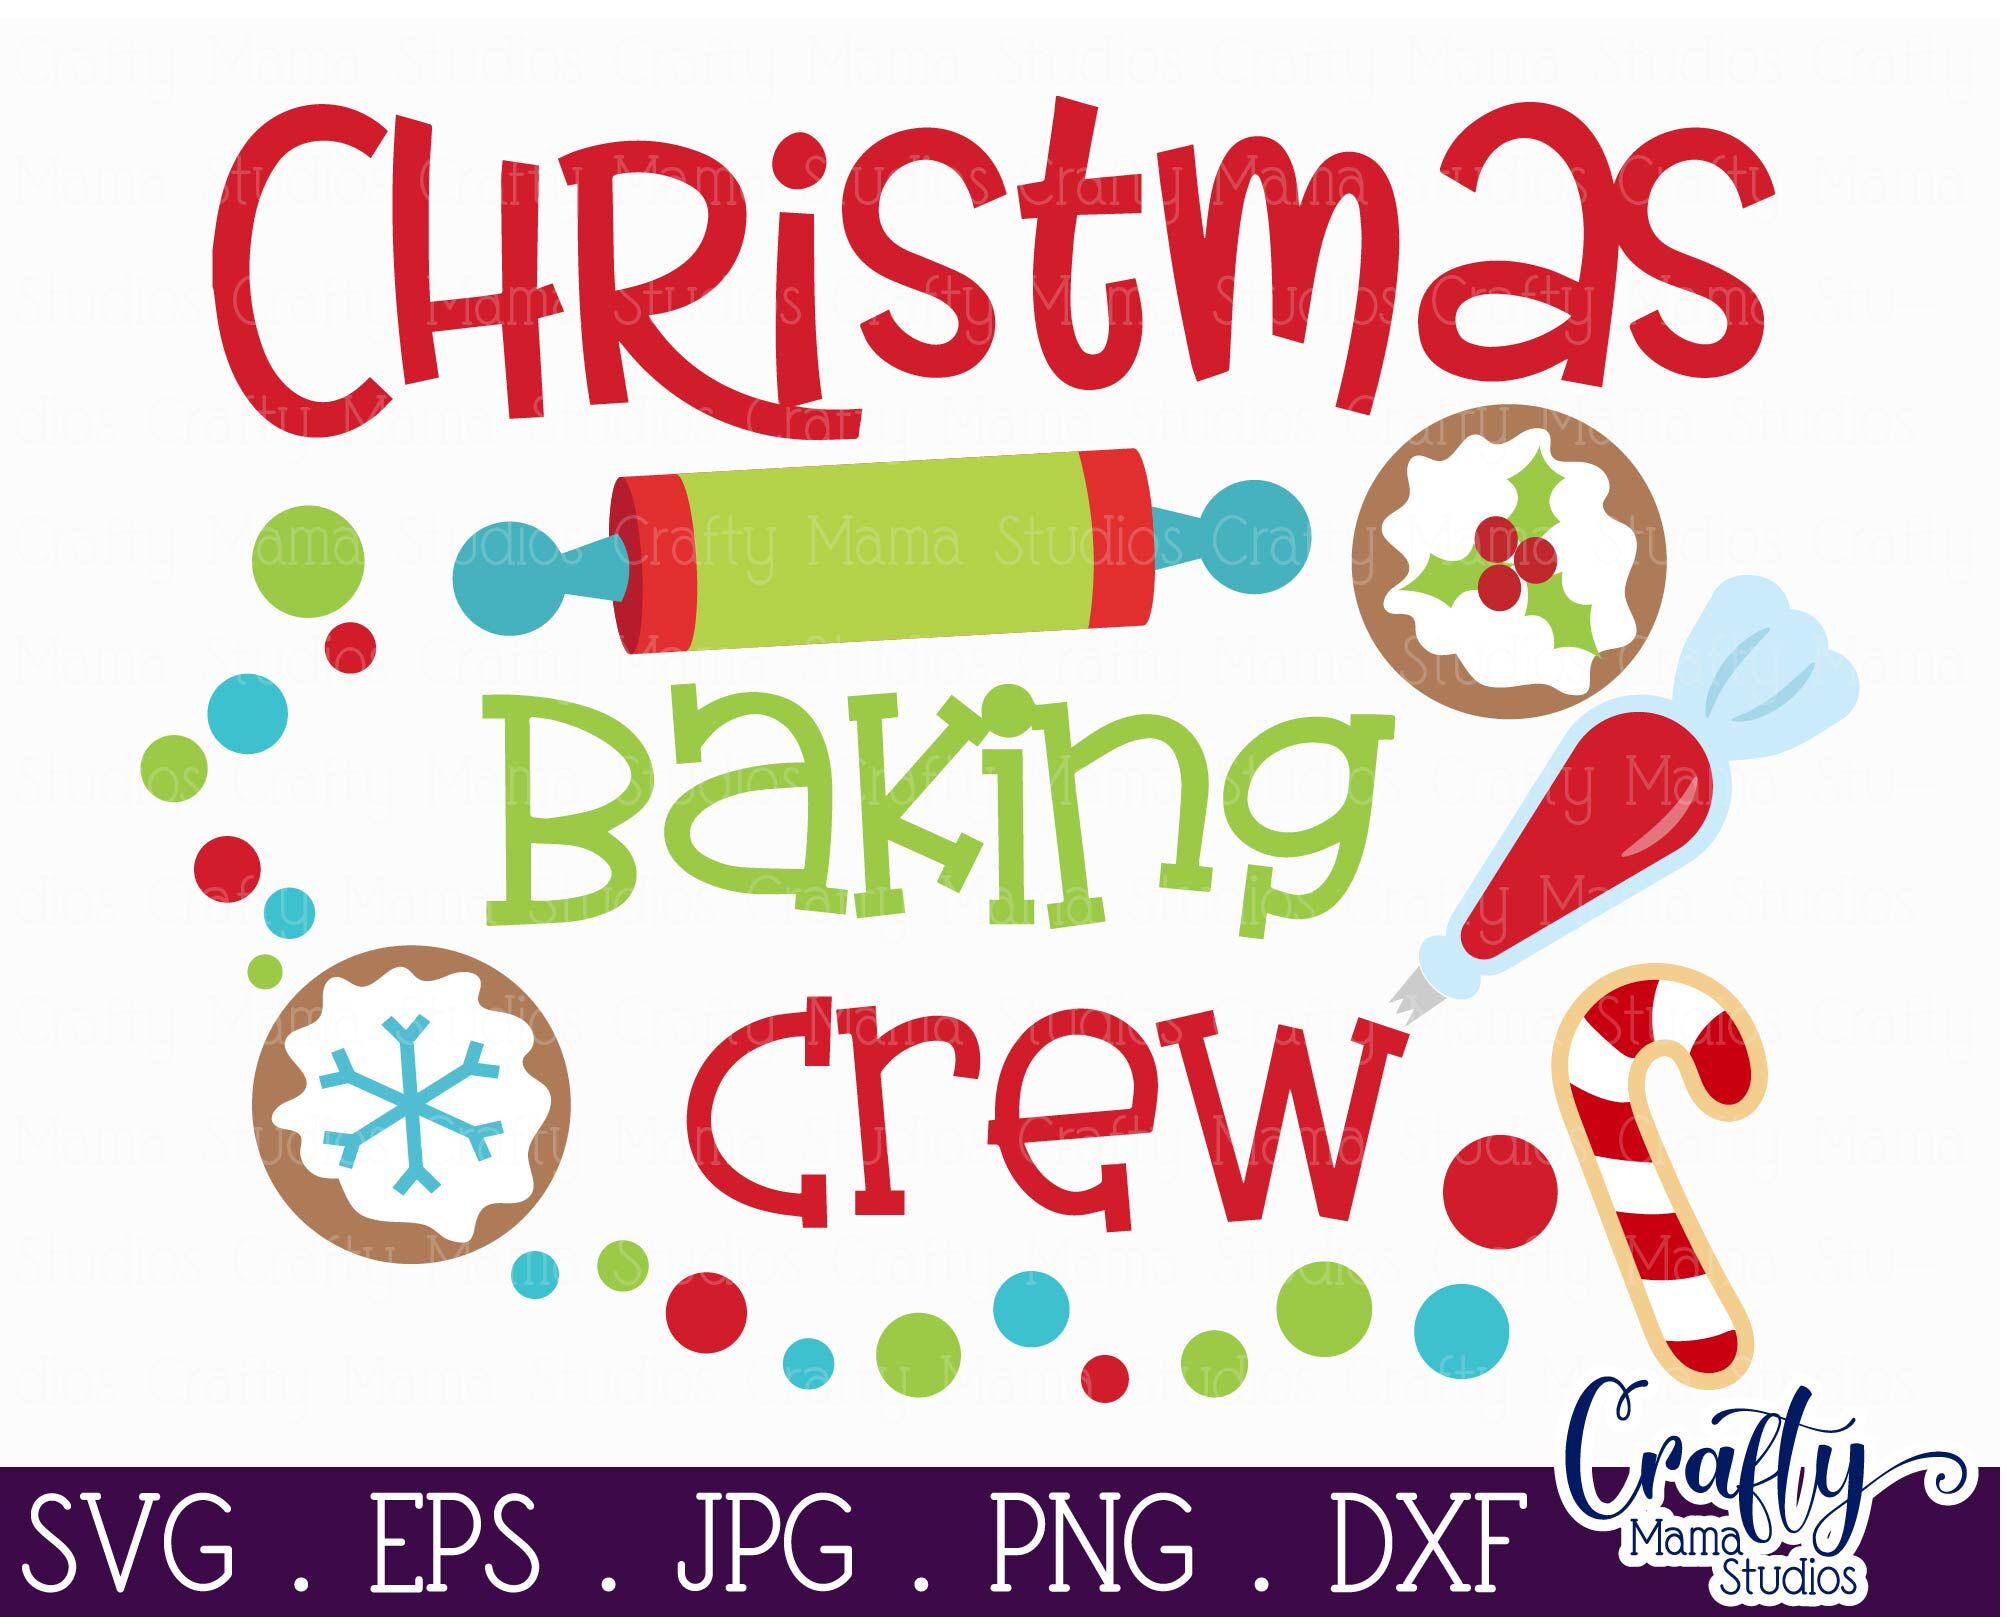 Download Christmas Svg Christmas Baking Crew Christmas Cookies Baking By Crafty Mama Studios Thehungryjpeg Com SVG Cut Files